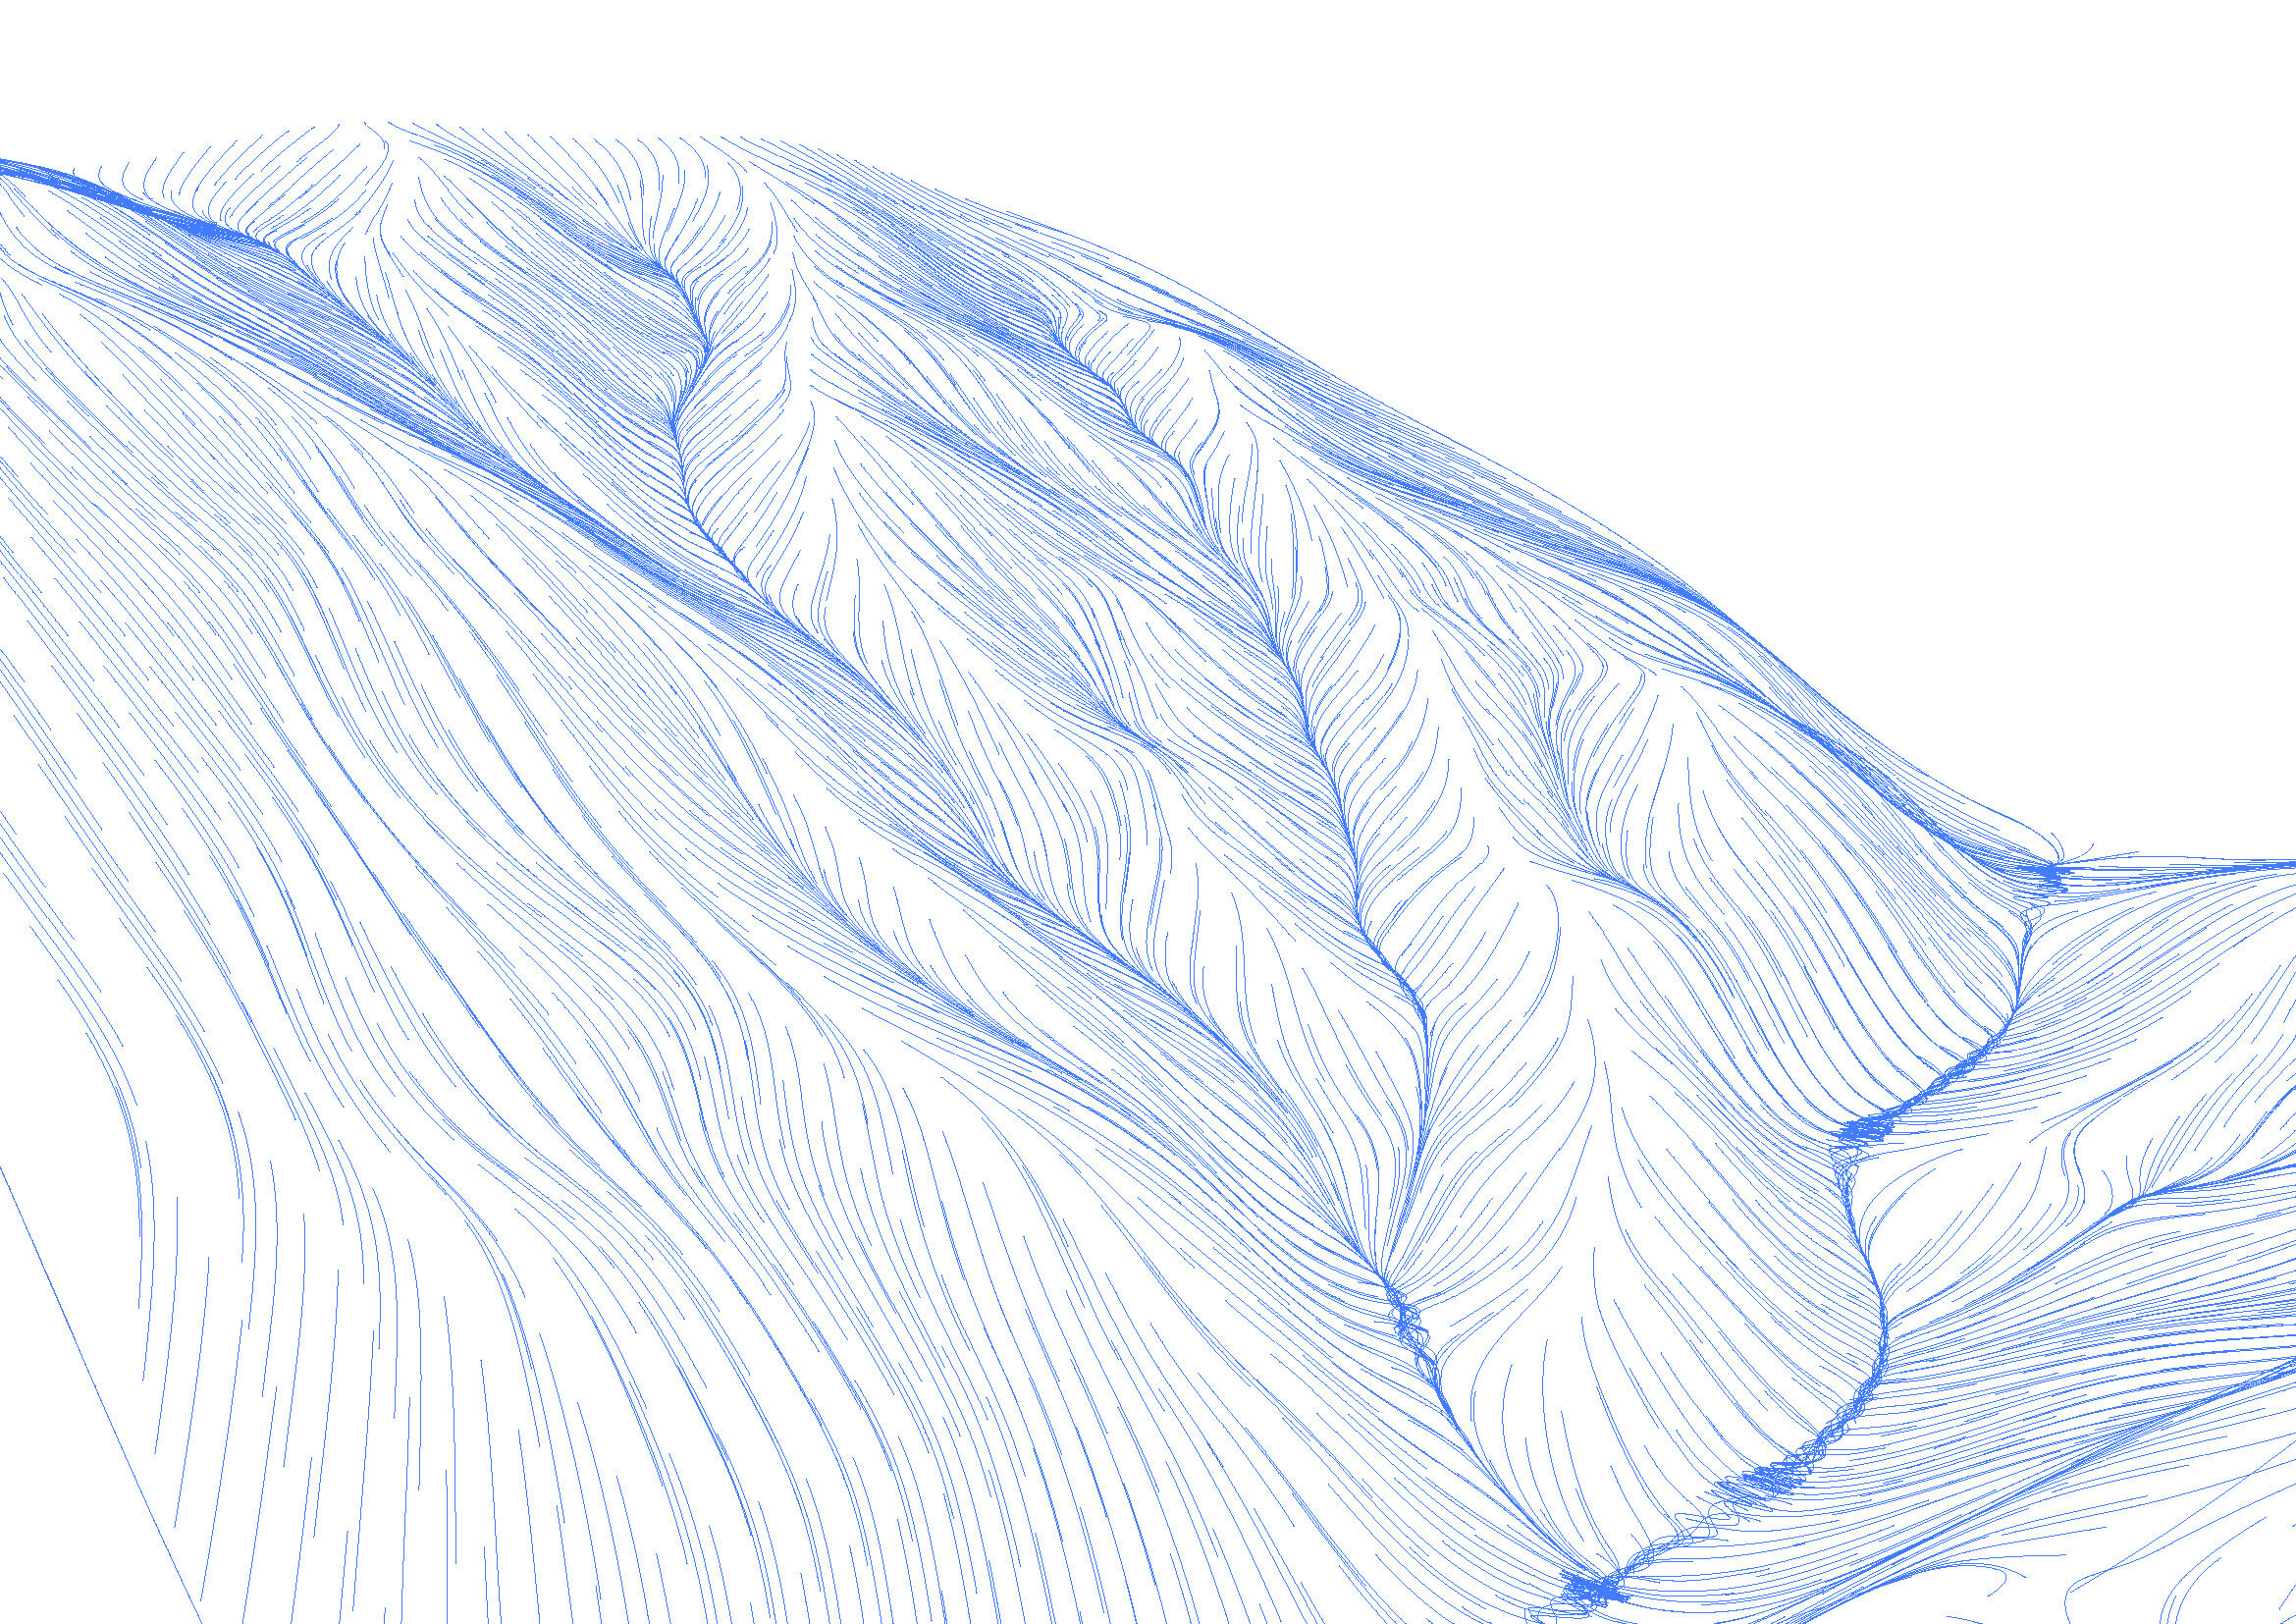 Terrain for water 3D A.jpg